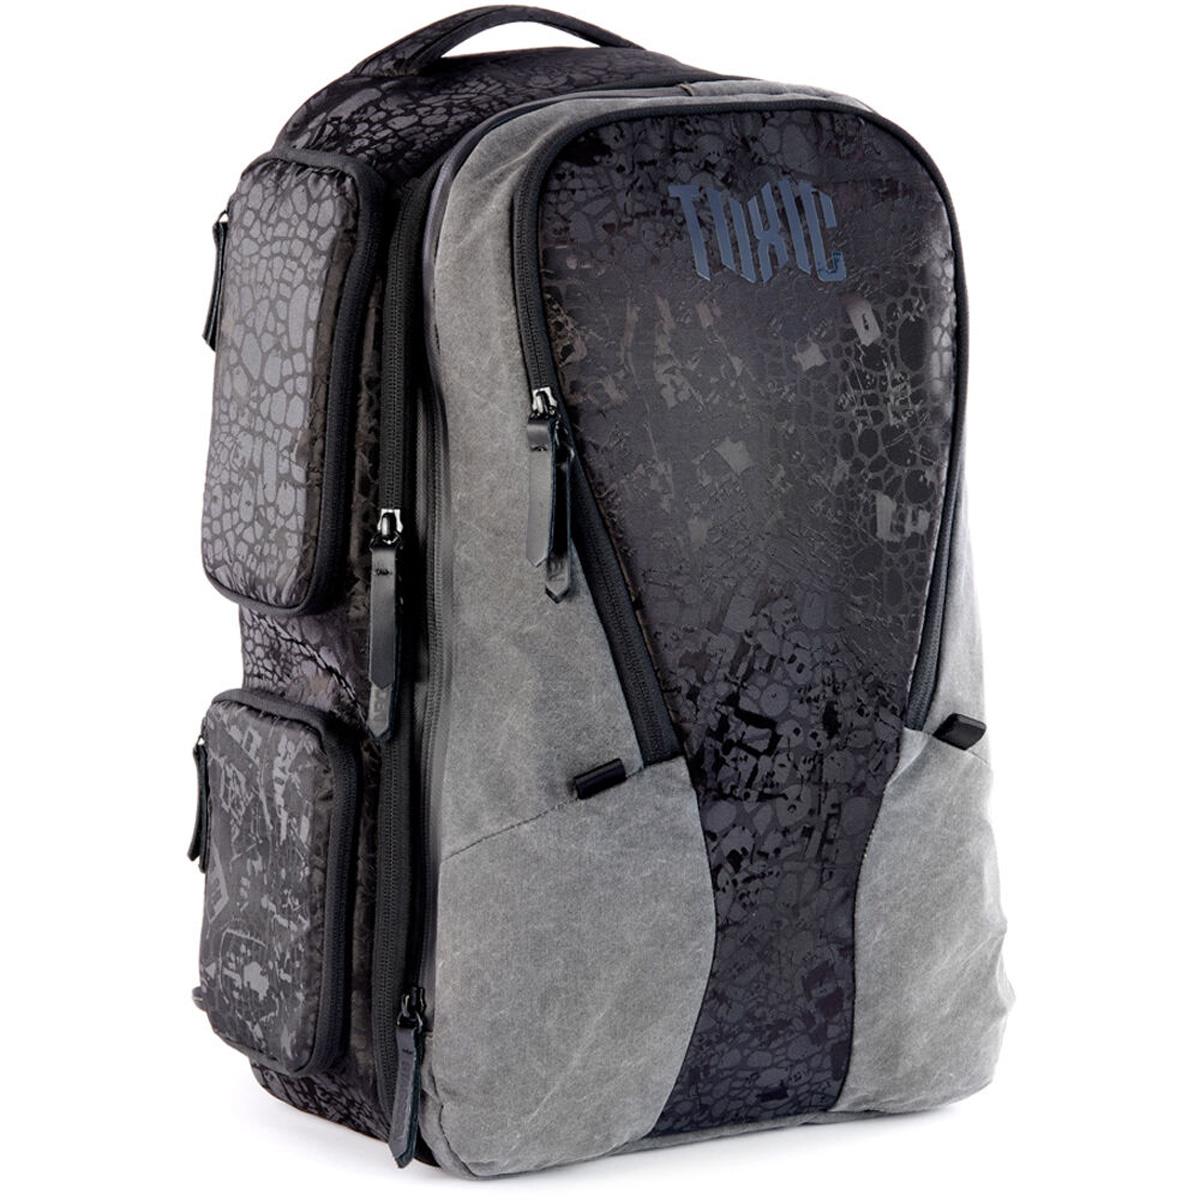 Рюкзак для камеры 3 Legged Thing Toxic Valkyrie, большой, черный оникс #VALKYRIEONYXL